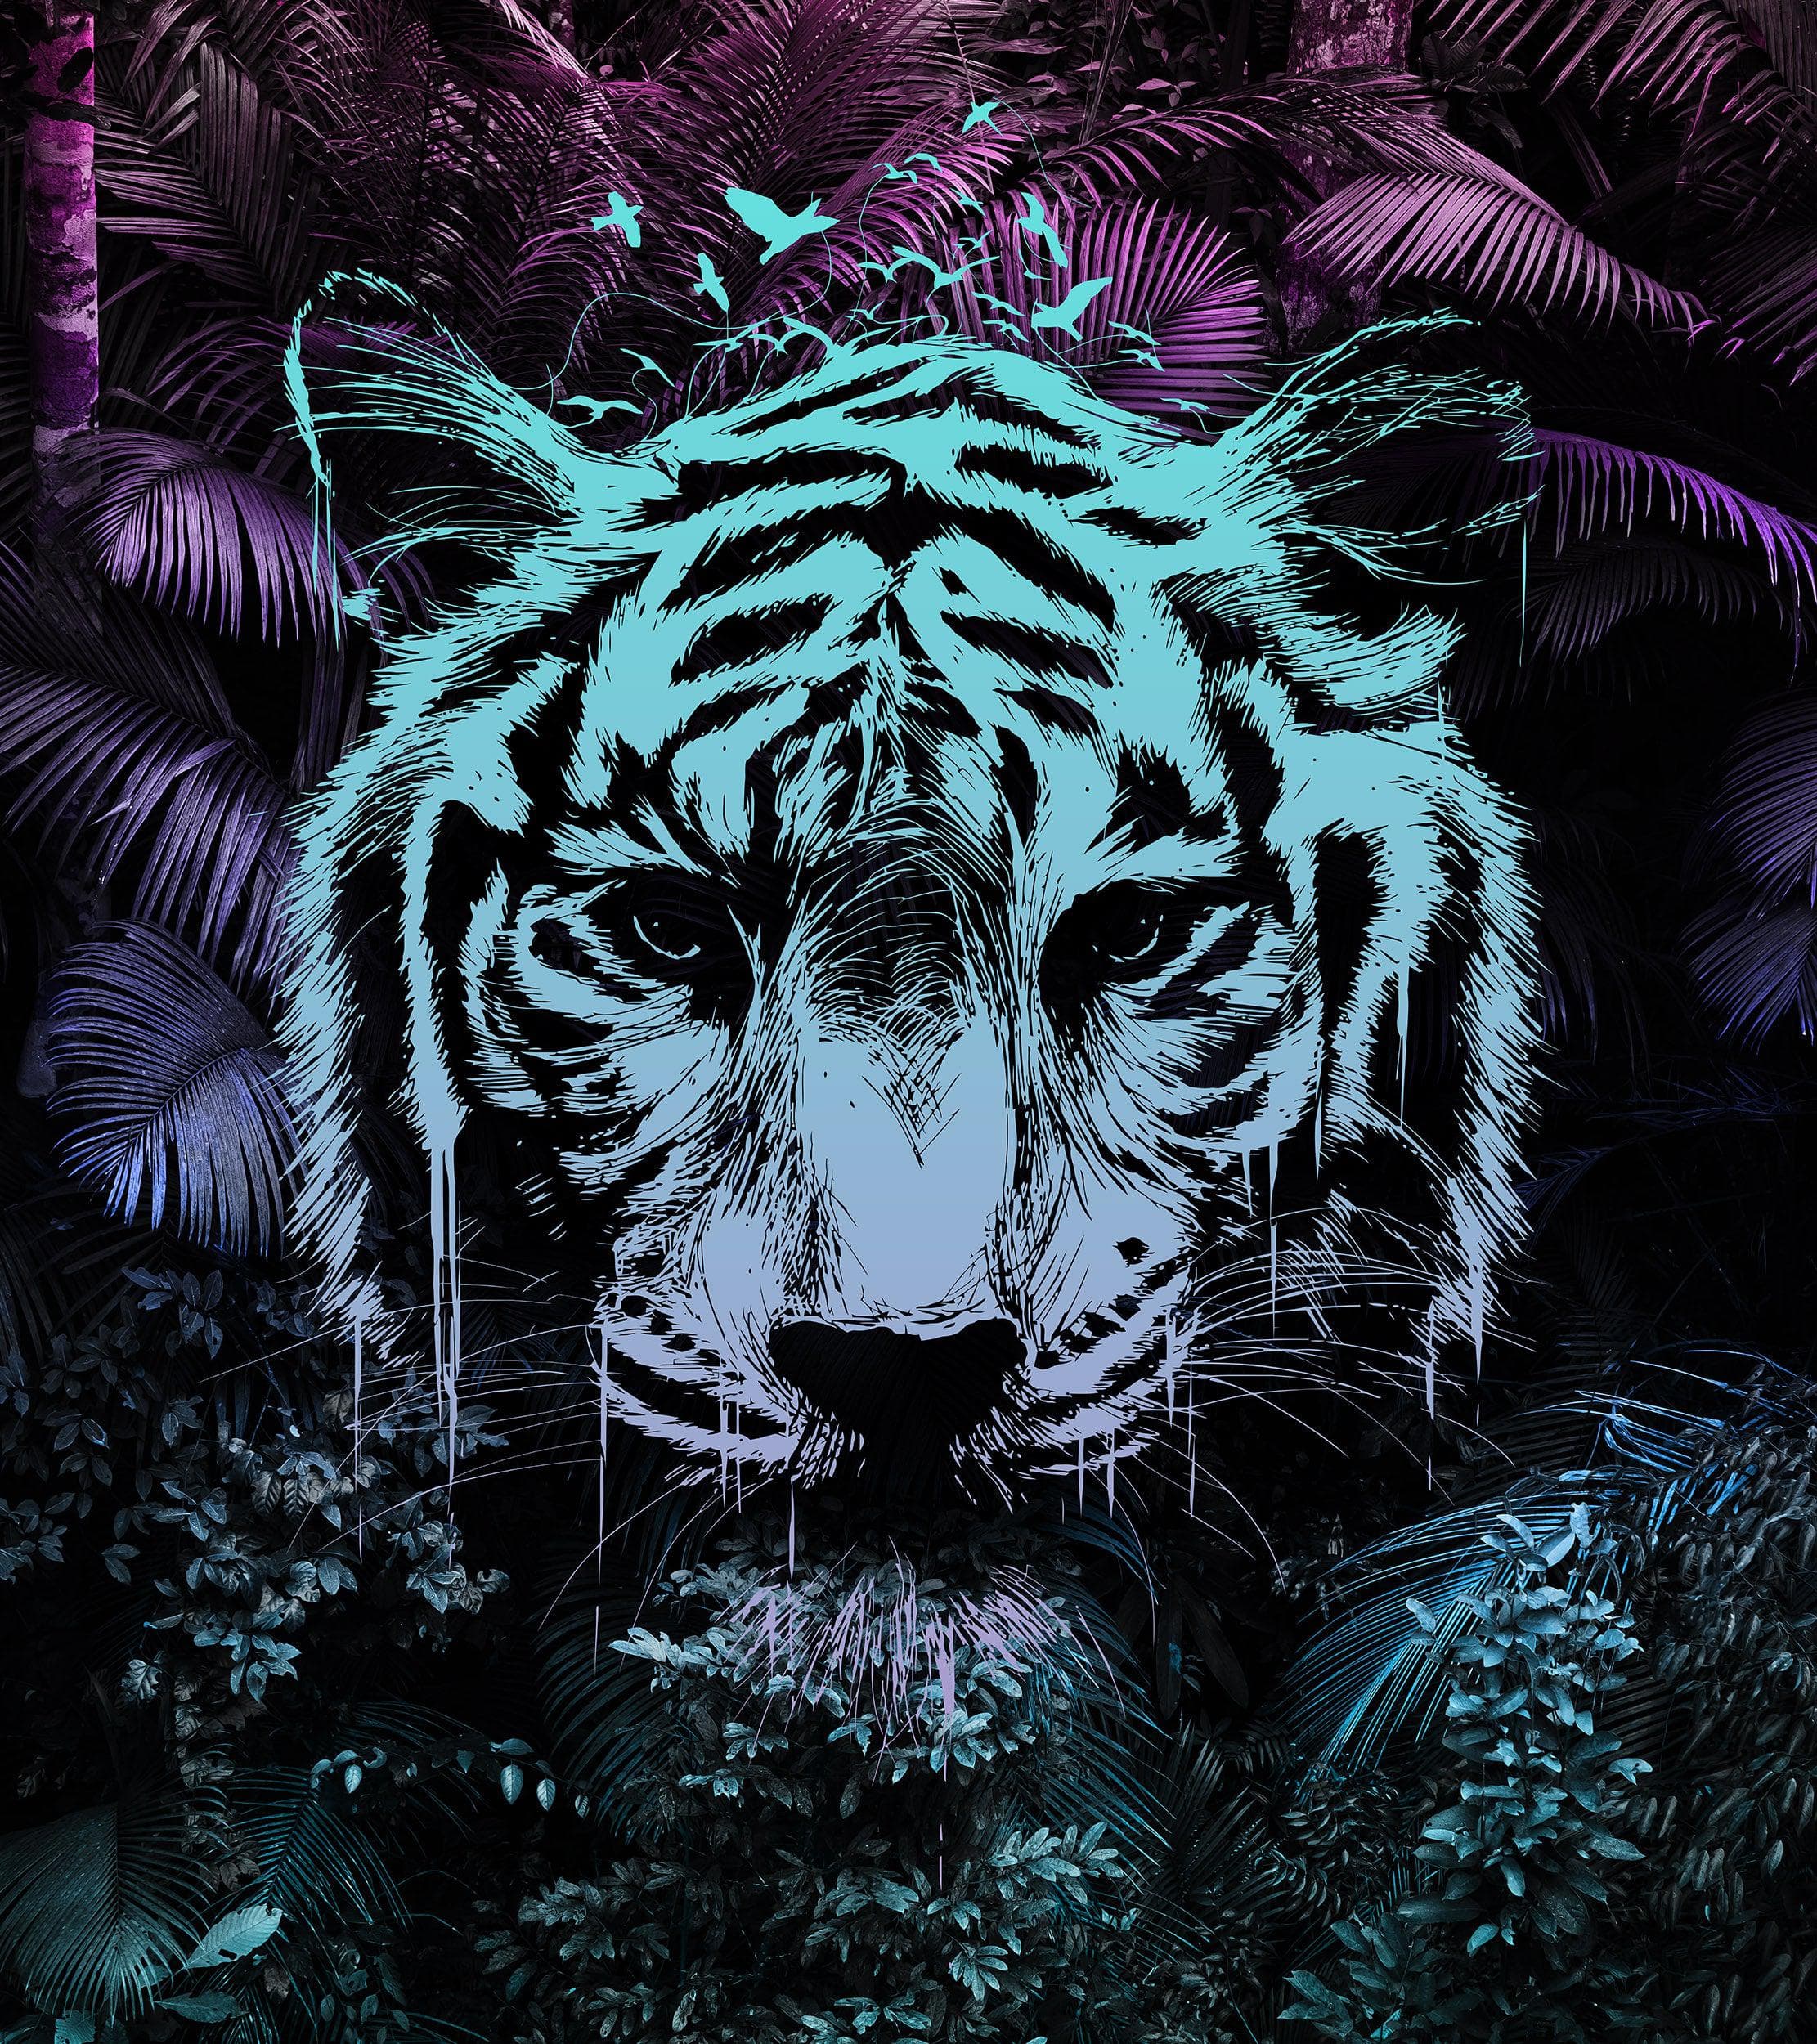 2015-11-04_09-52-10 | Tiger wallpaper, Tiger photography, Animal wallpaper